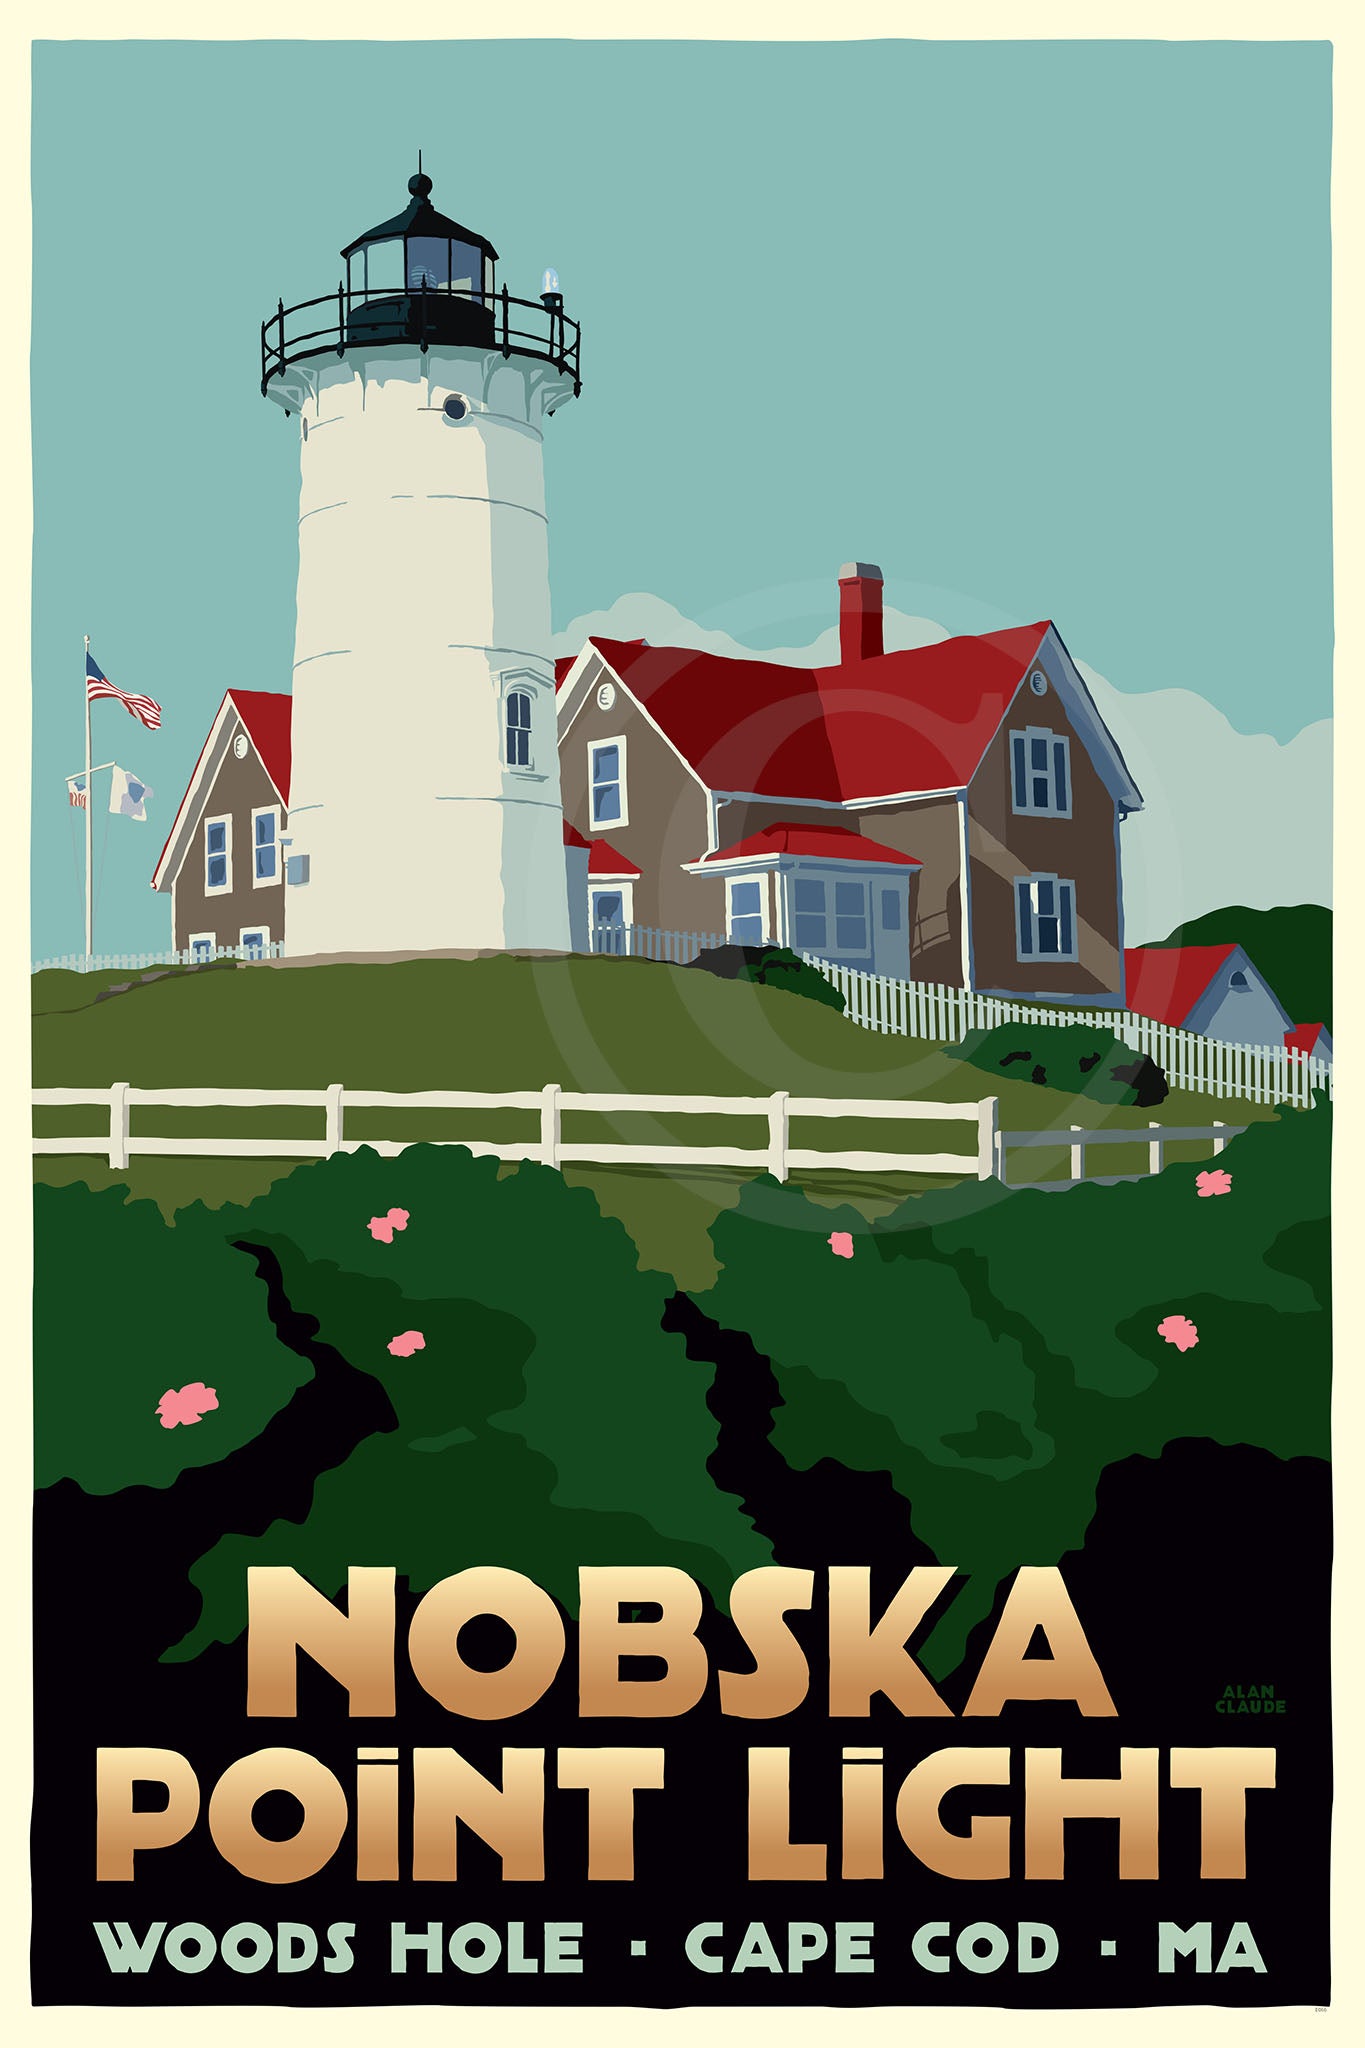 Nobska Point Light Art Print 24" x 36" Travel Poster By Alan Claude - Massachusetts